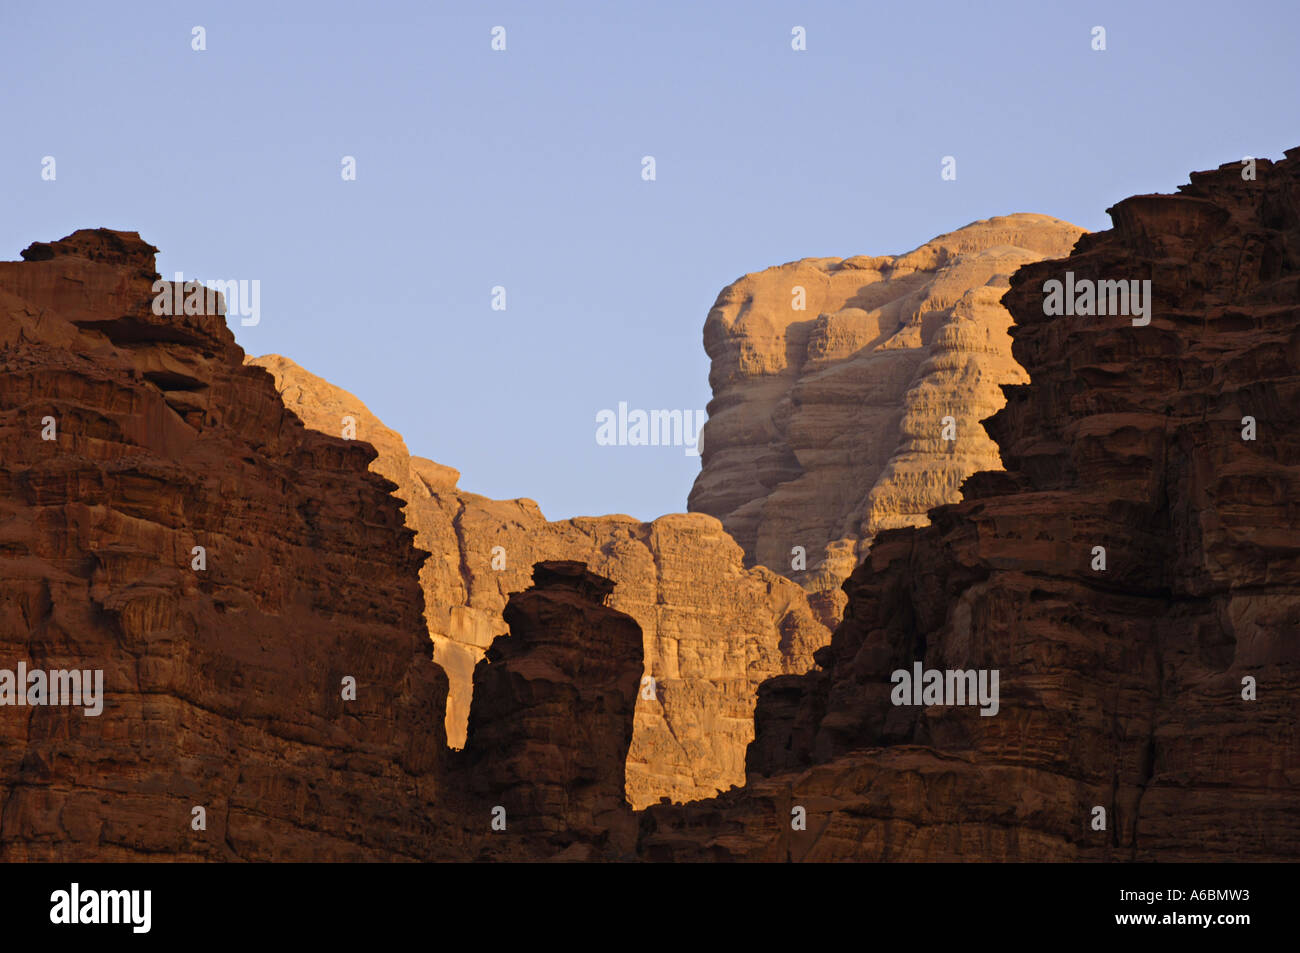 Early morning view towards Jebel Rum, the highest peak in Wadi Rum ...